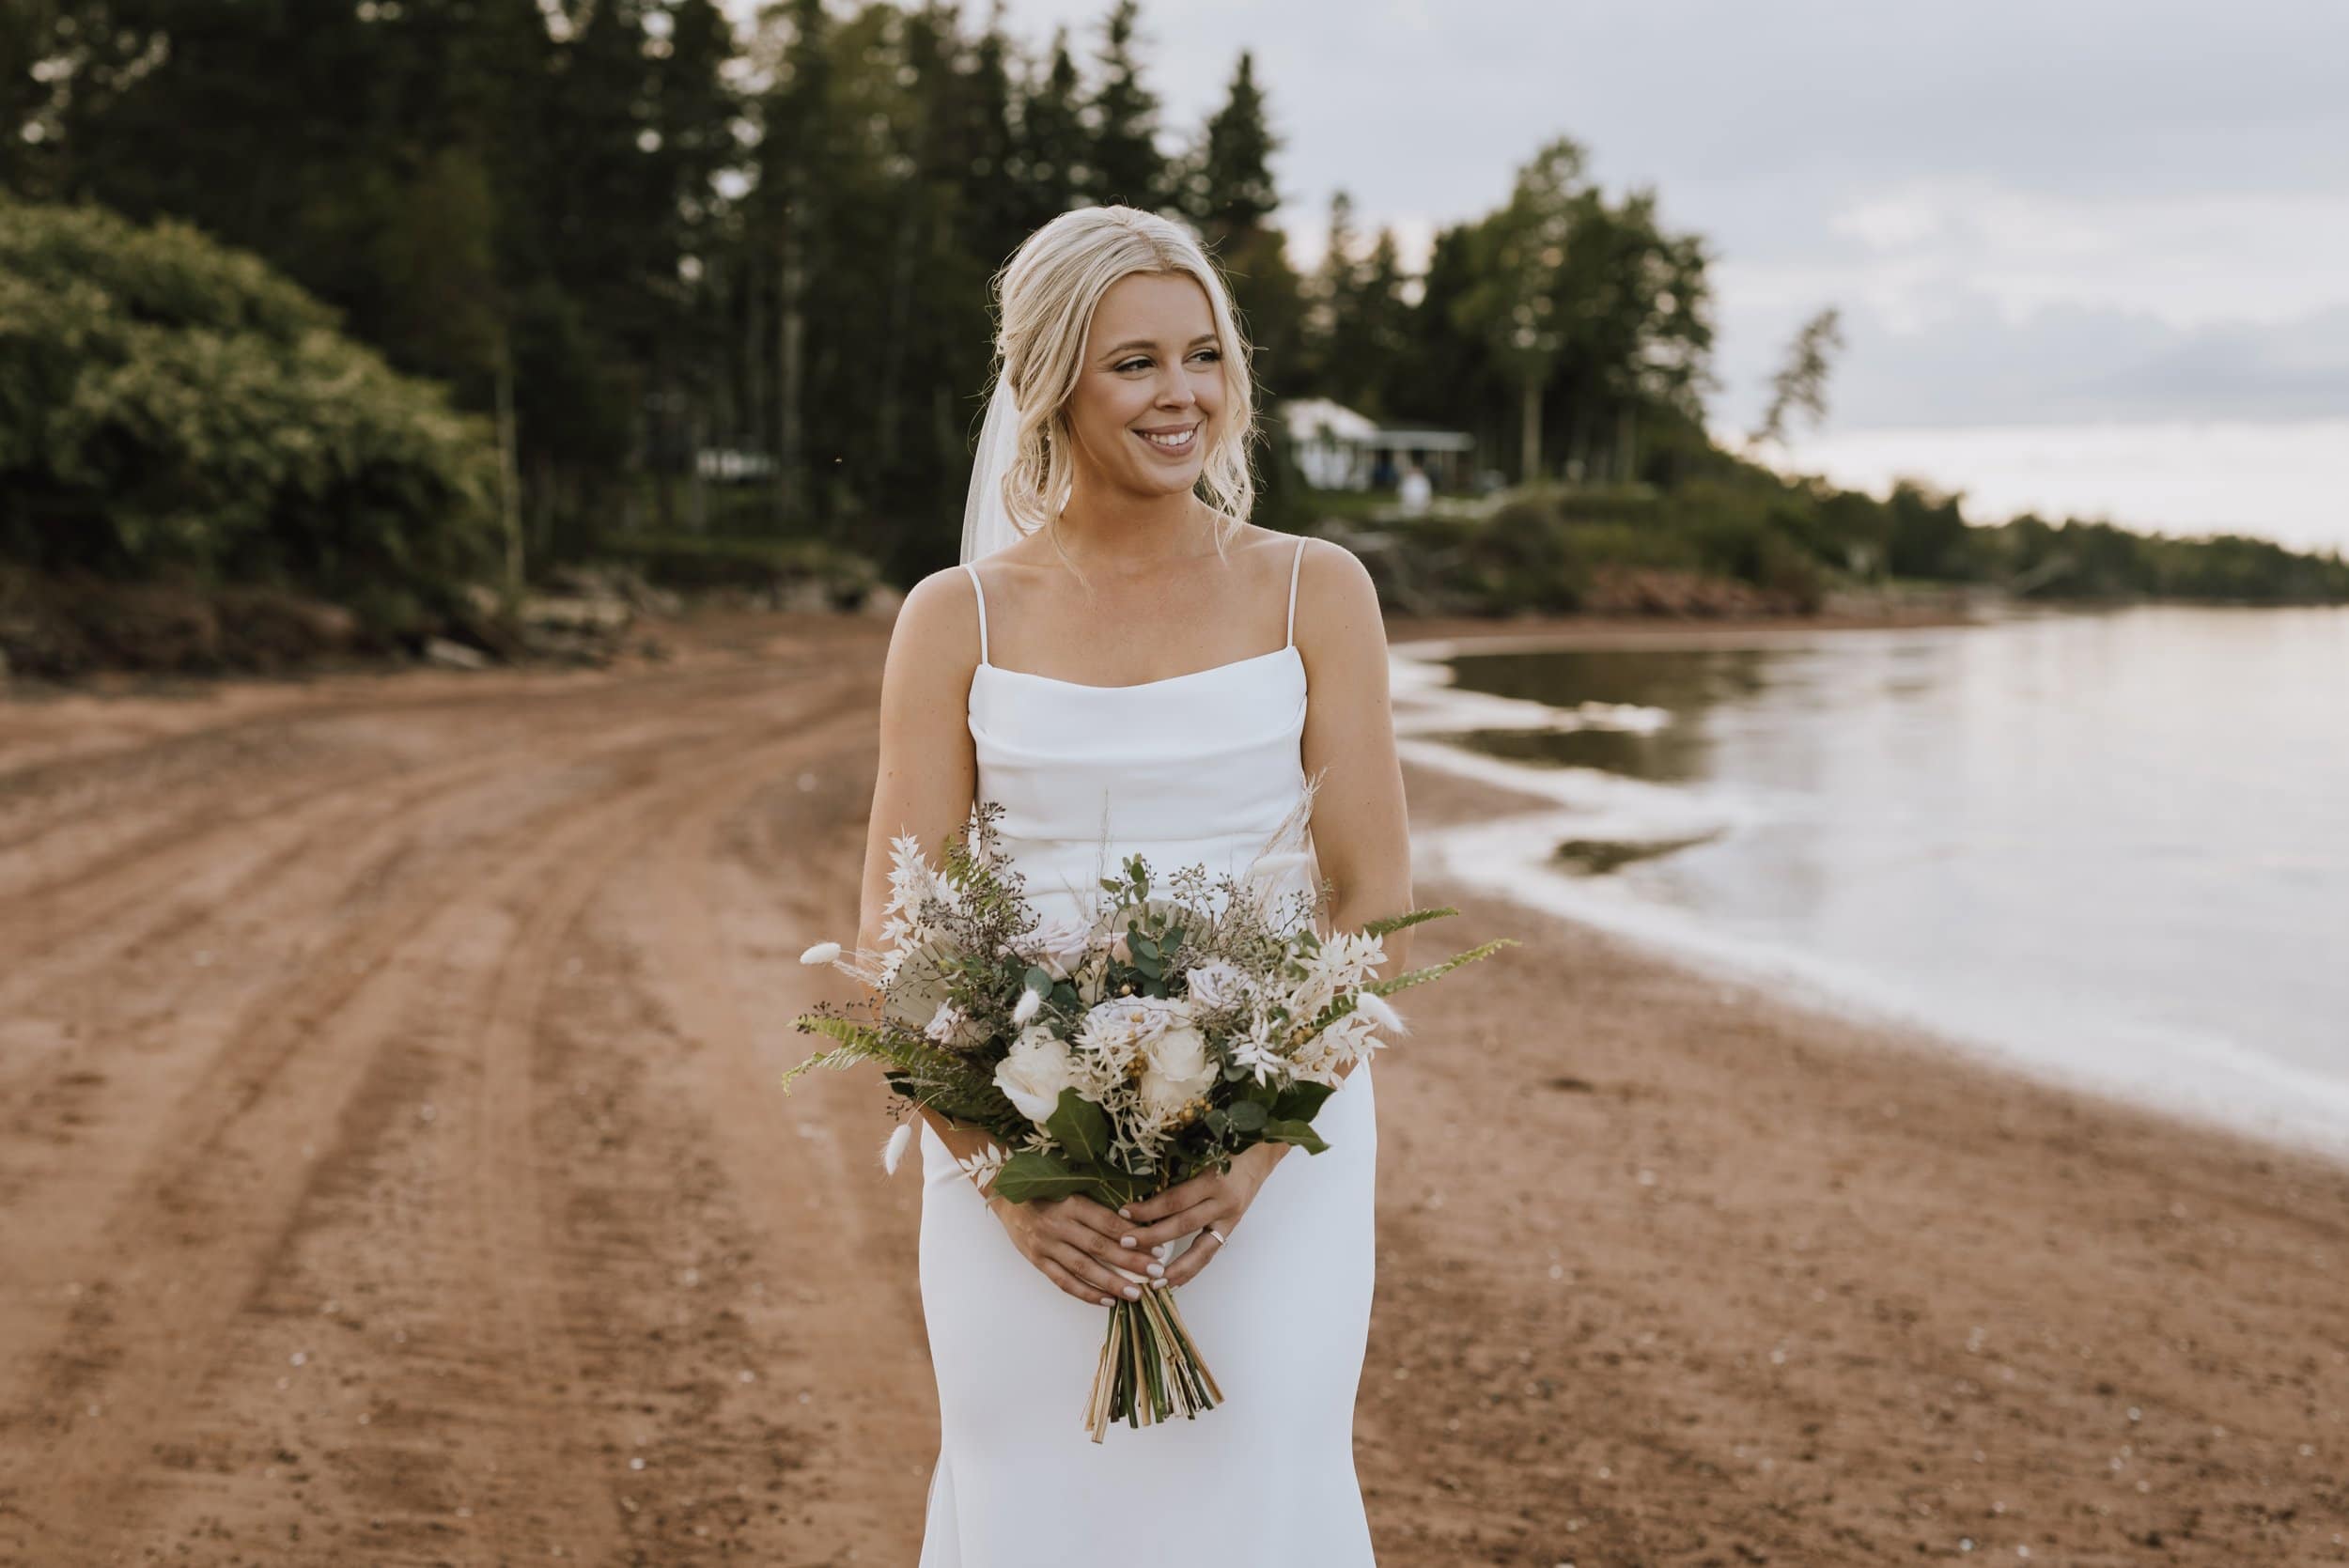 Prince Edward Island wedding photographer - Michaela Bell Photography